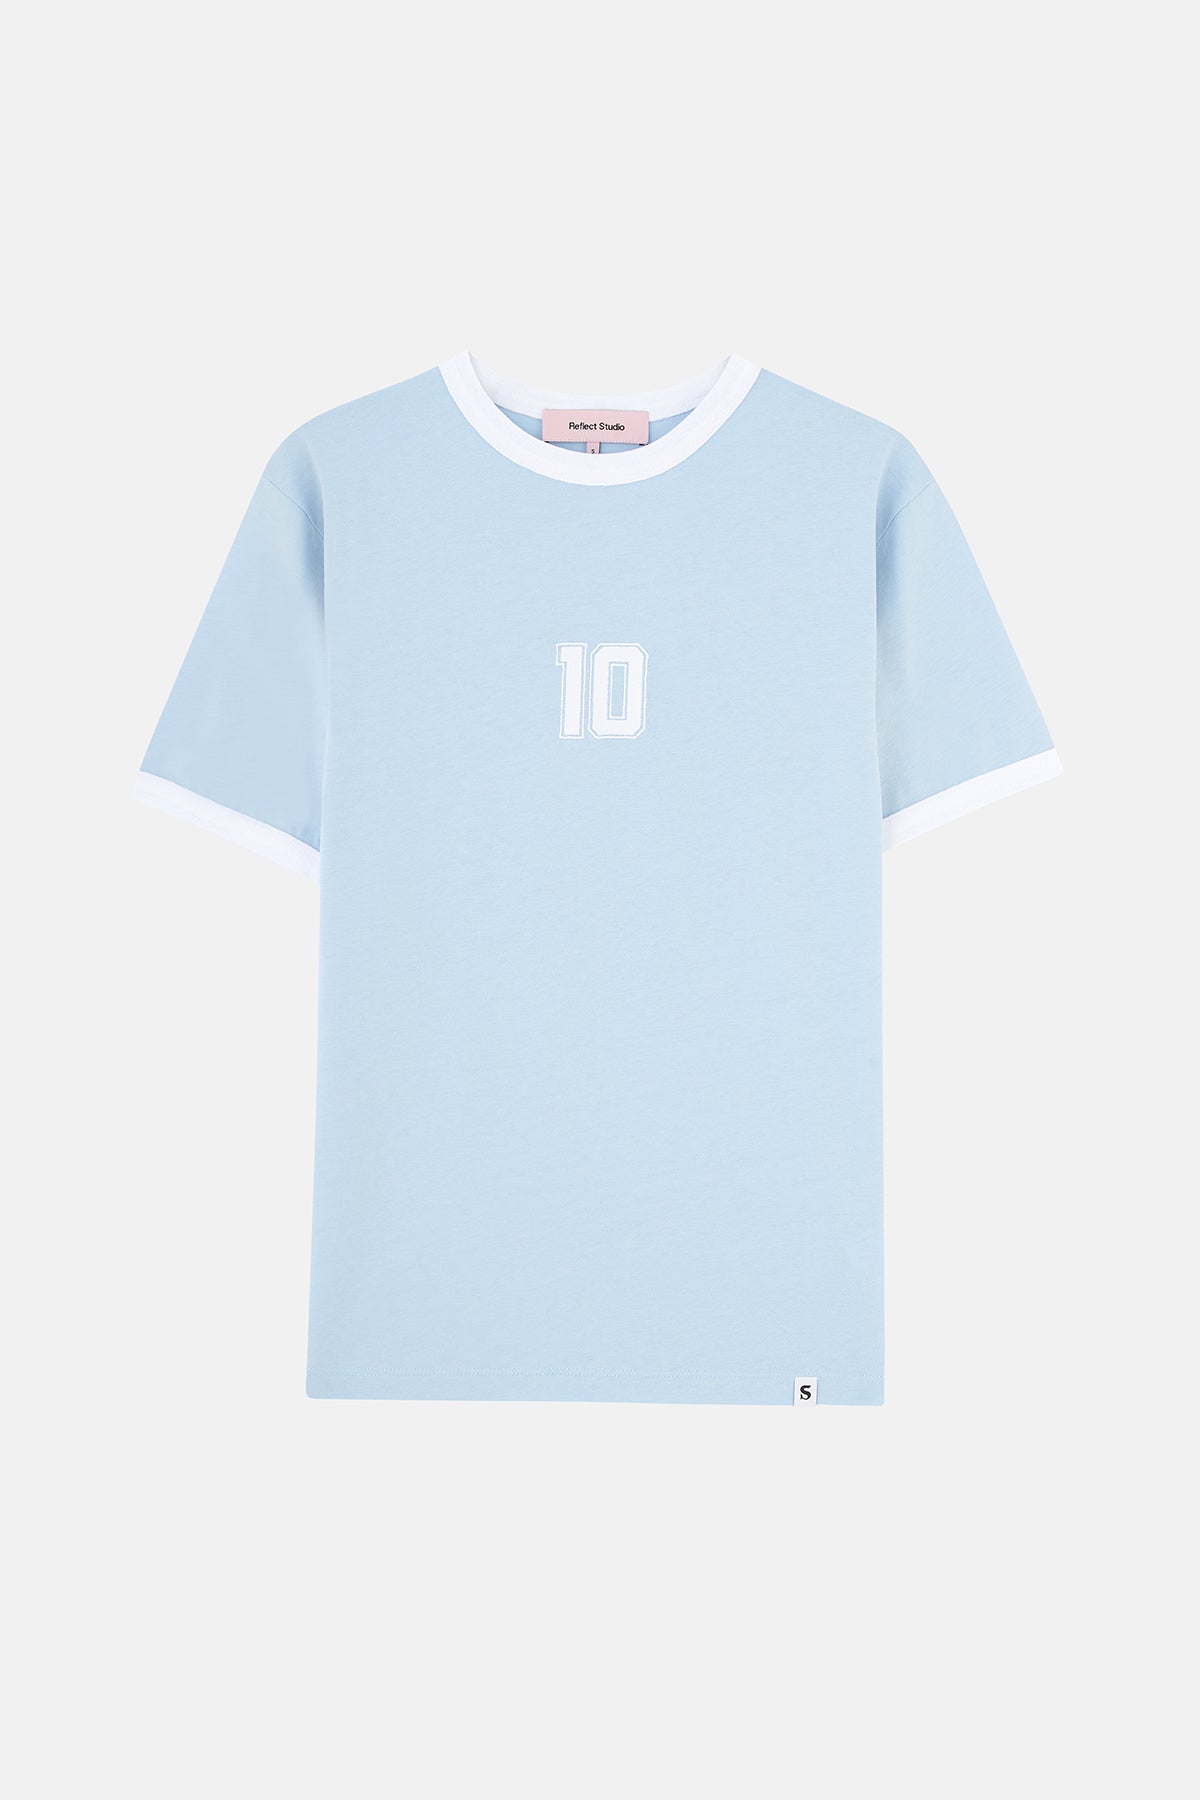 Argentina 10  Supreme T-shirt - Açık Mavi